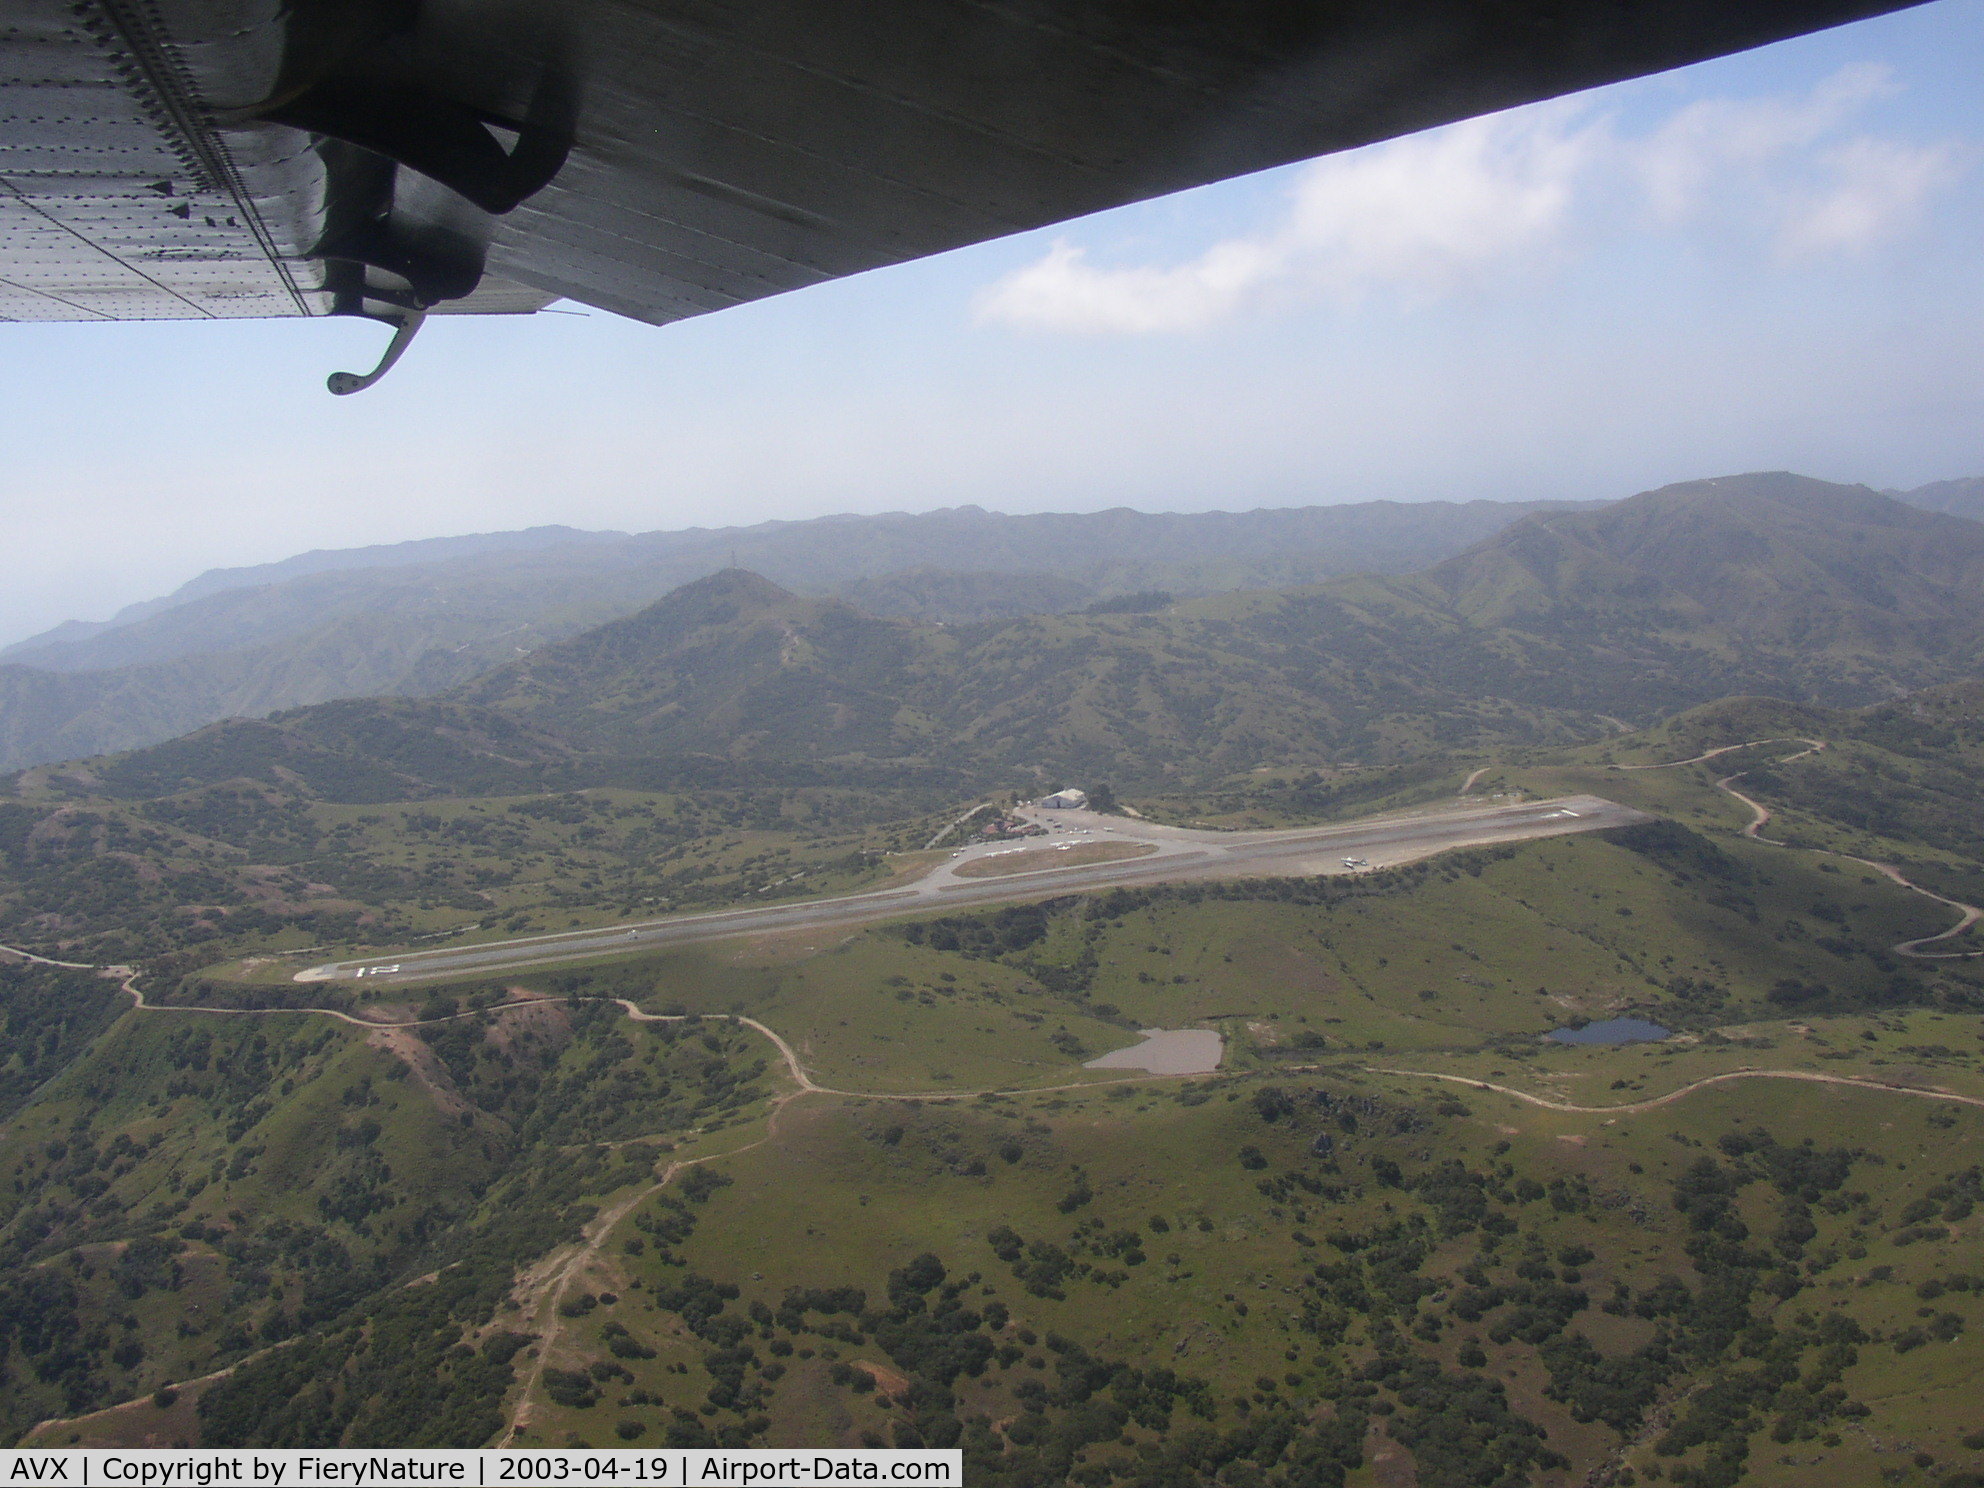 Catalina Airport (AVX) - Catalina Island